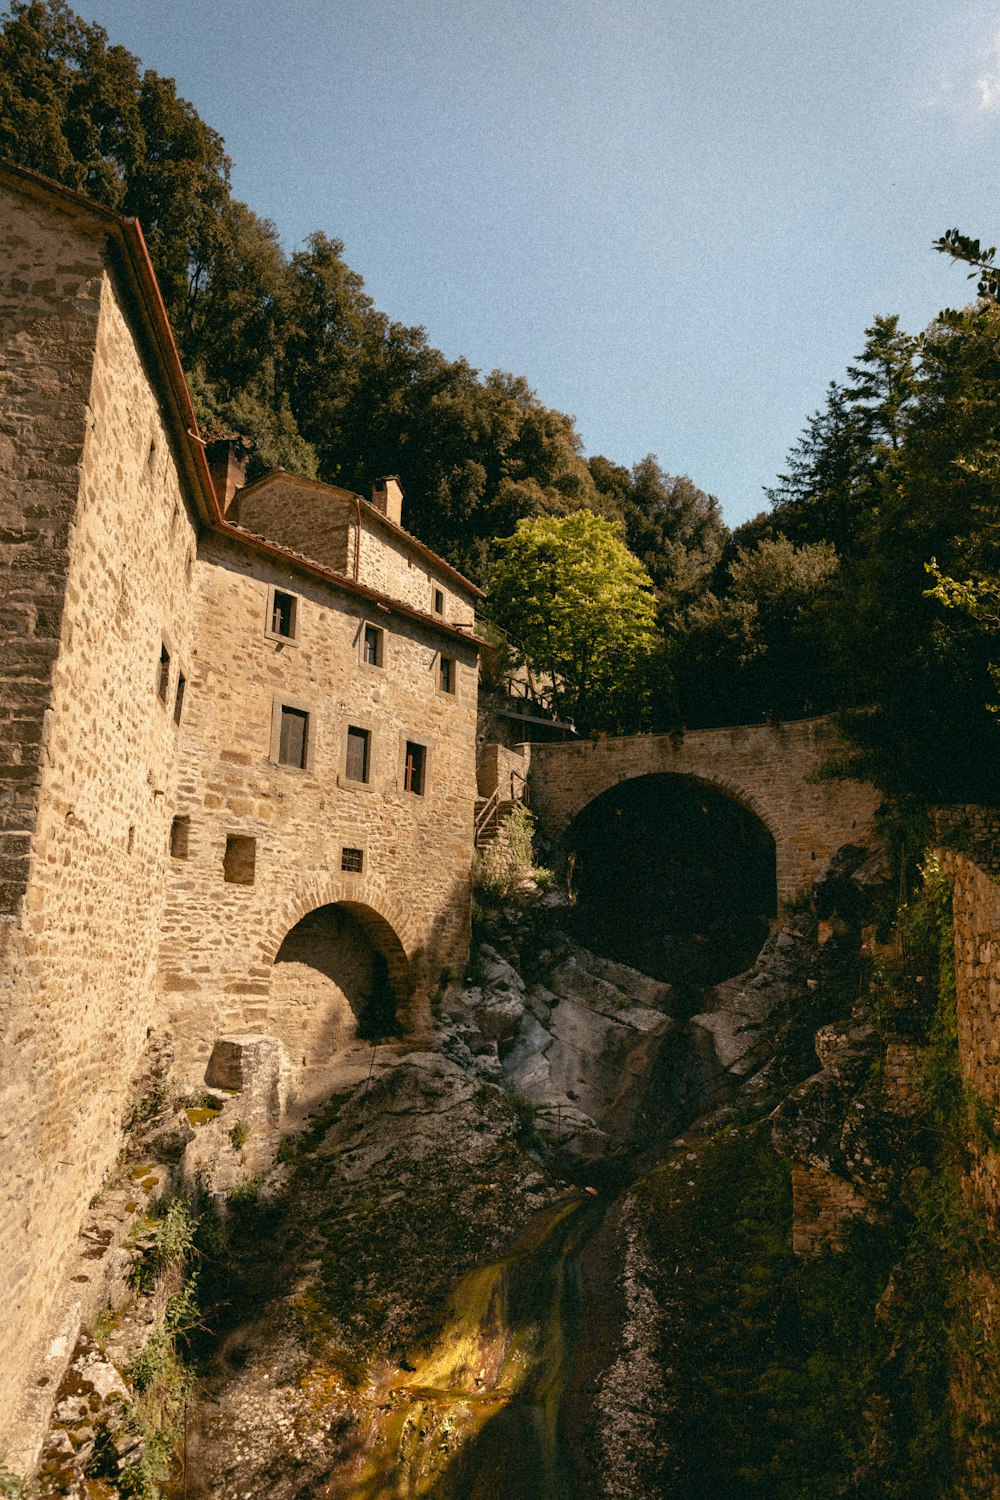 a stone bridge over a river next to a stone building